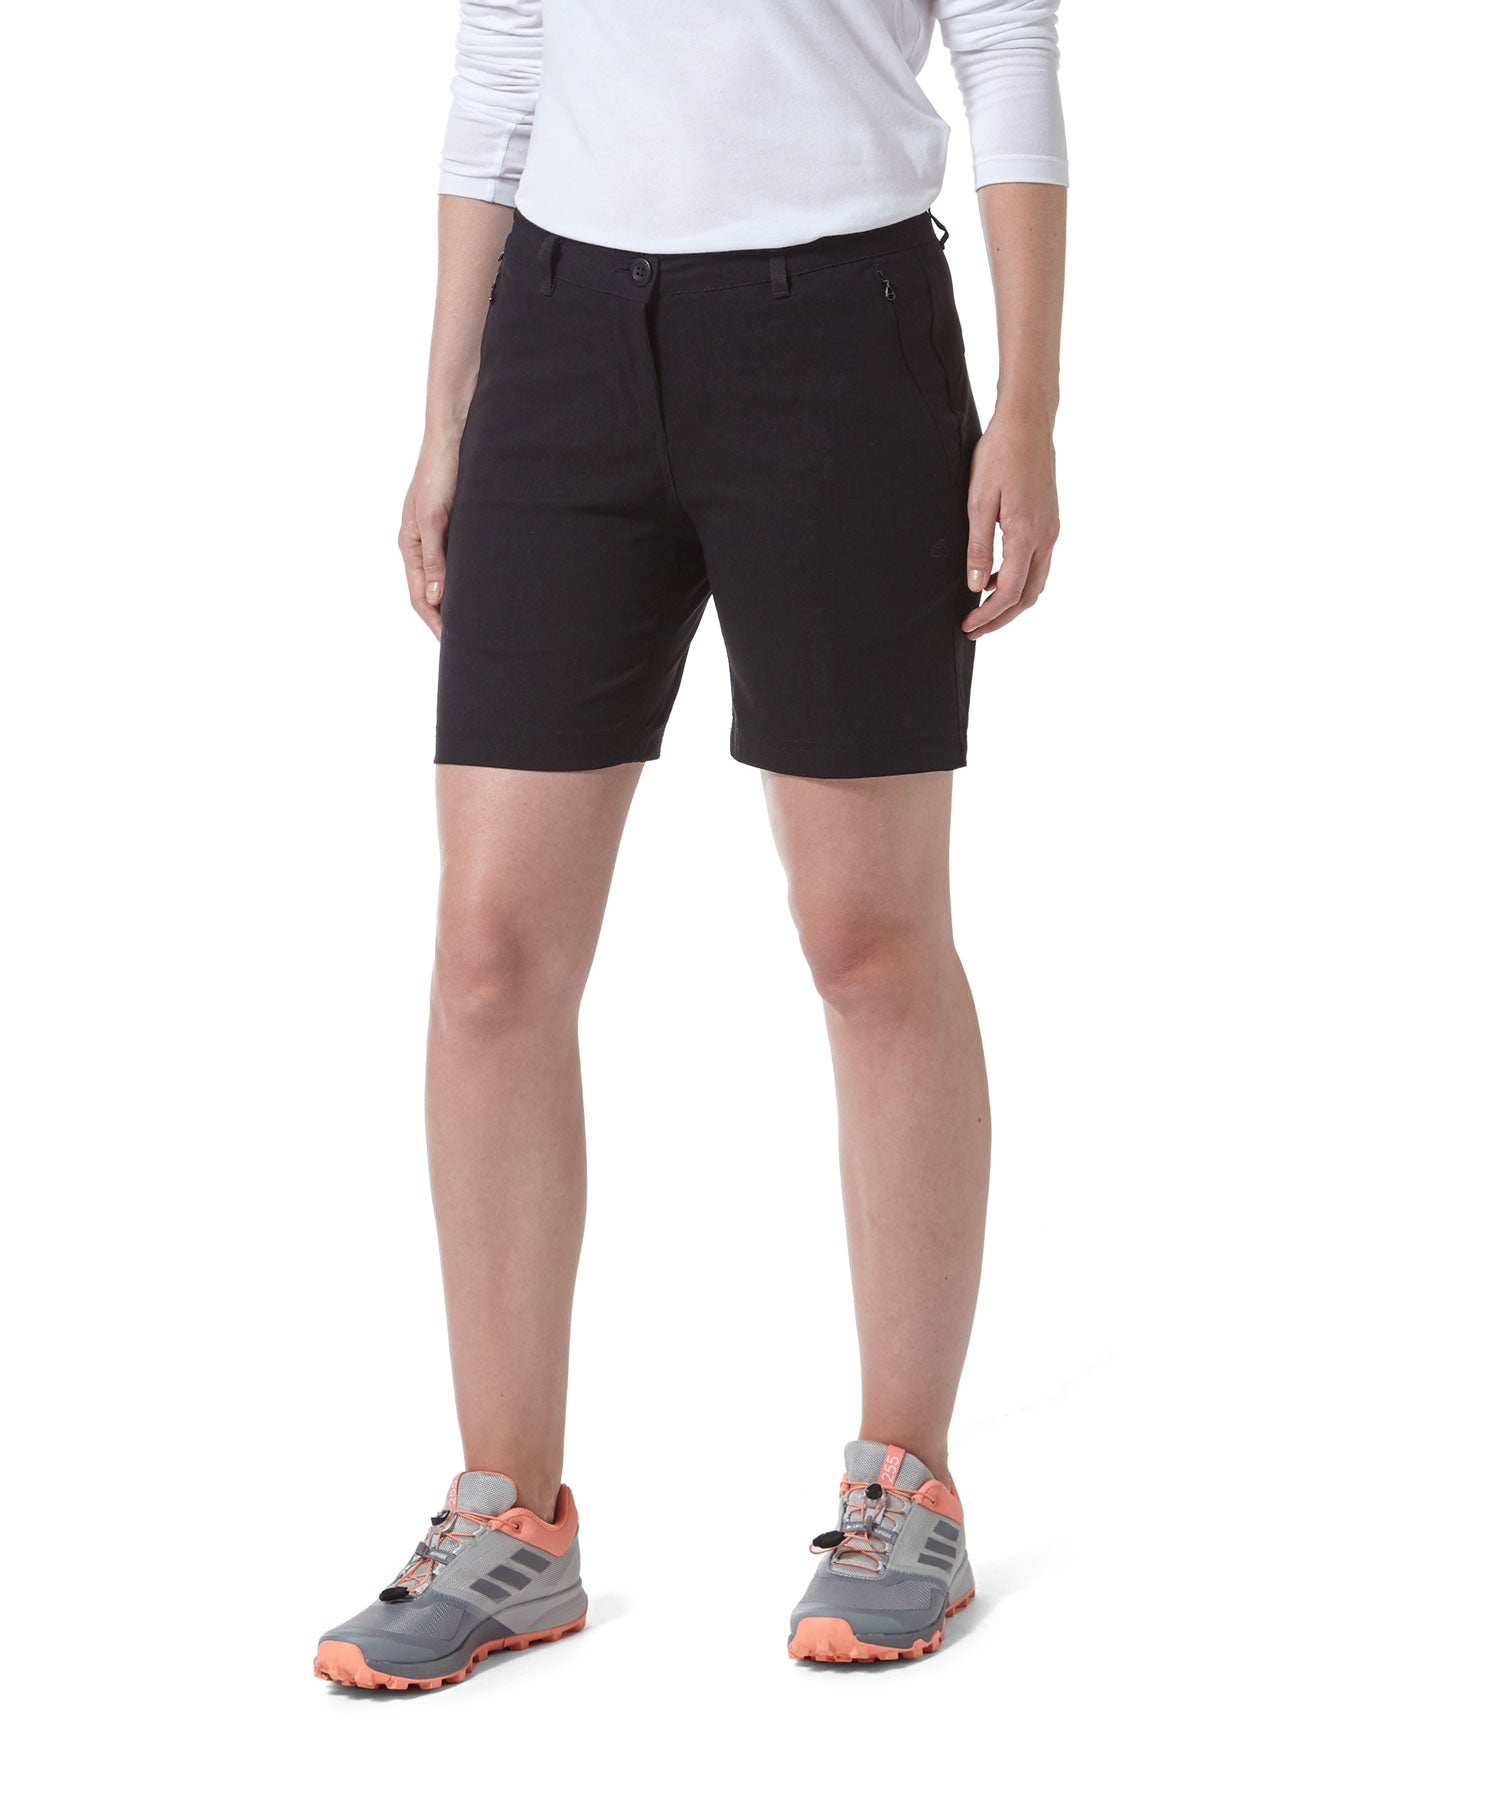 Black Stretch Kiwi shorts